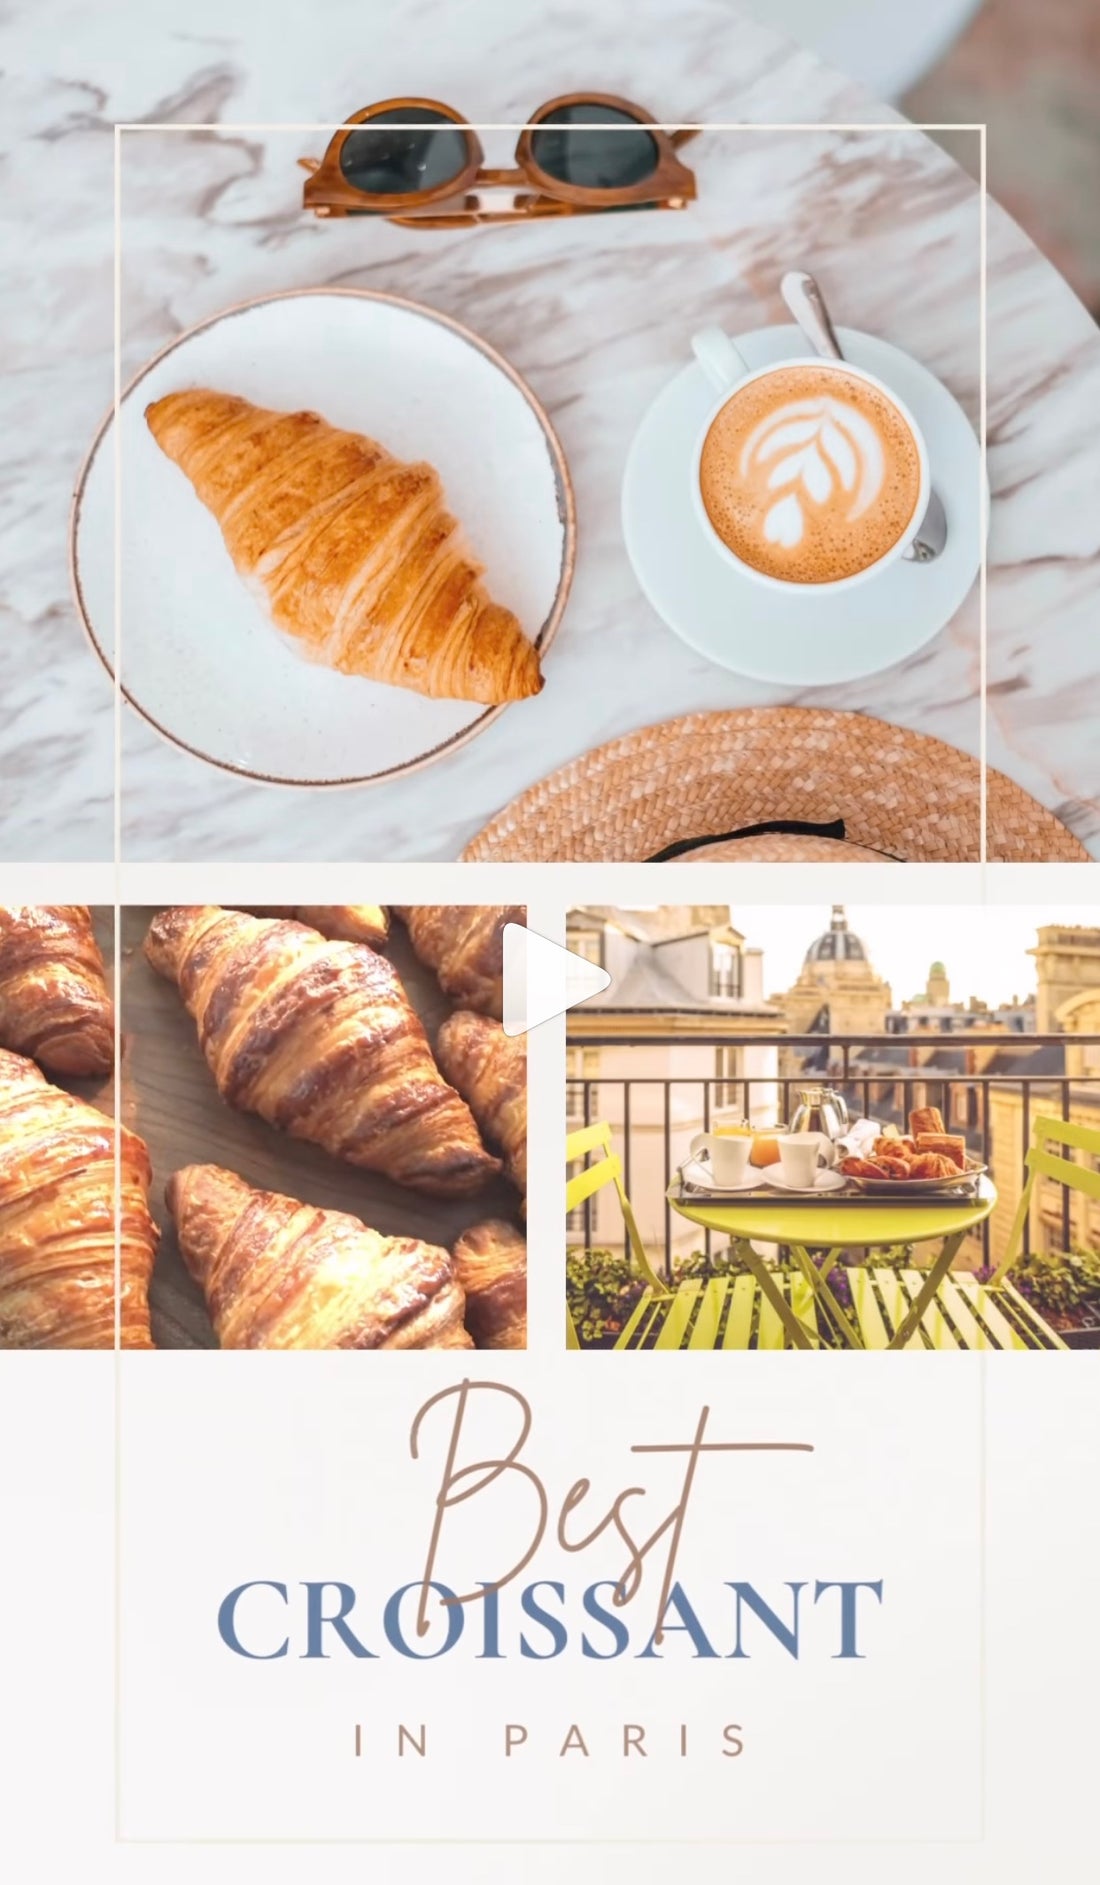 The best croissant 🥐 in Paris?